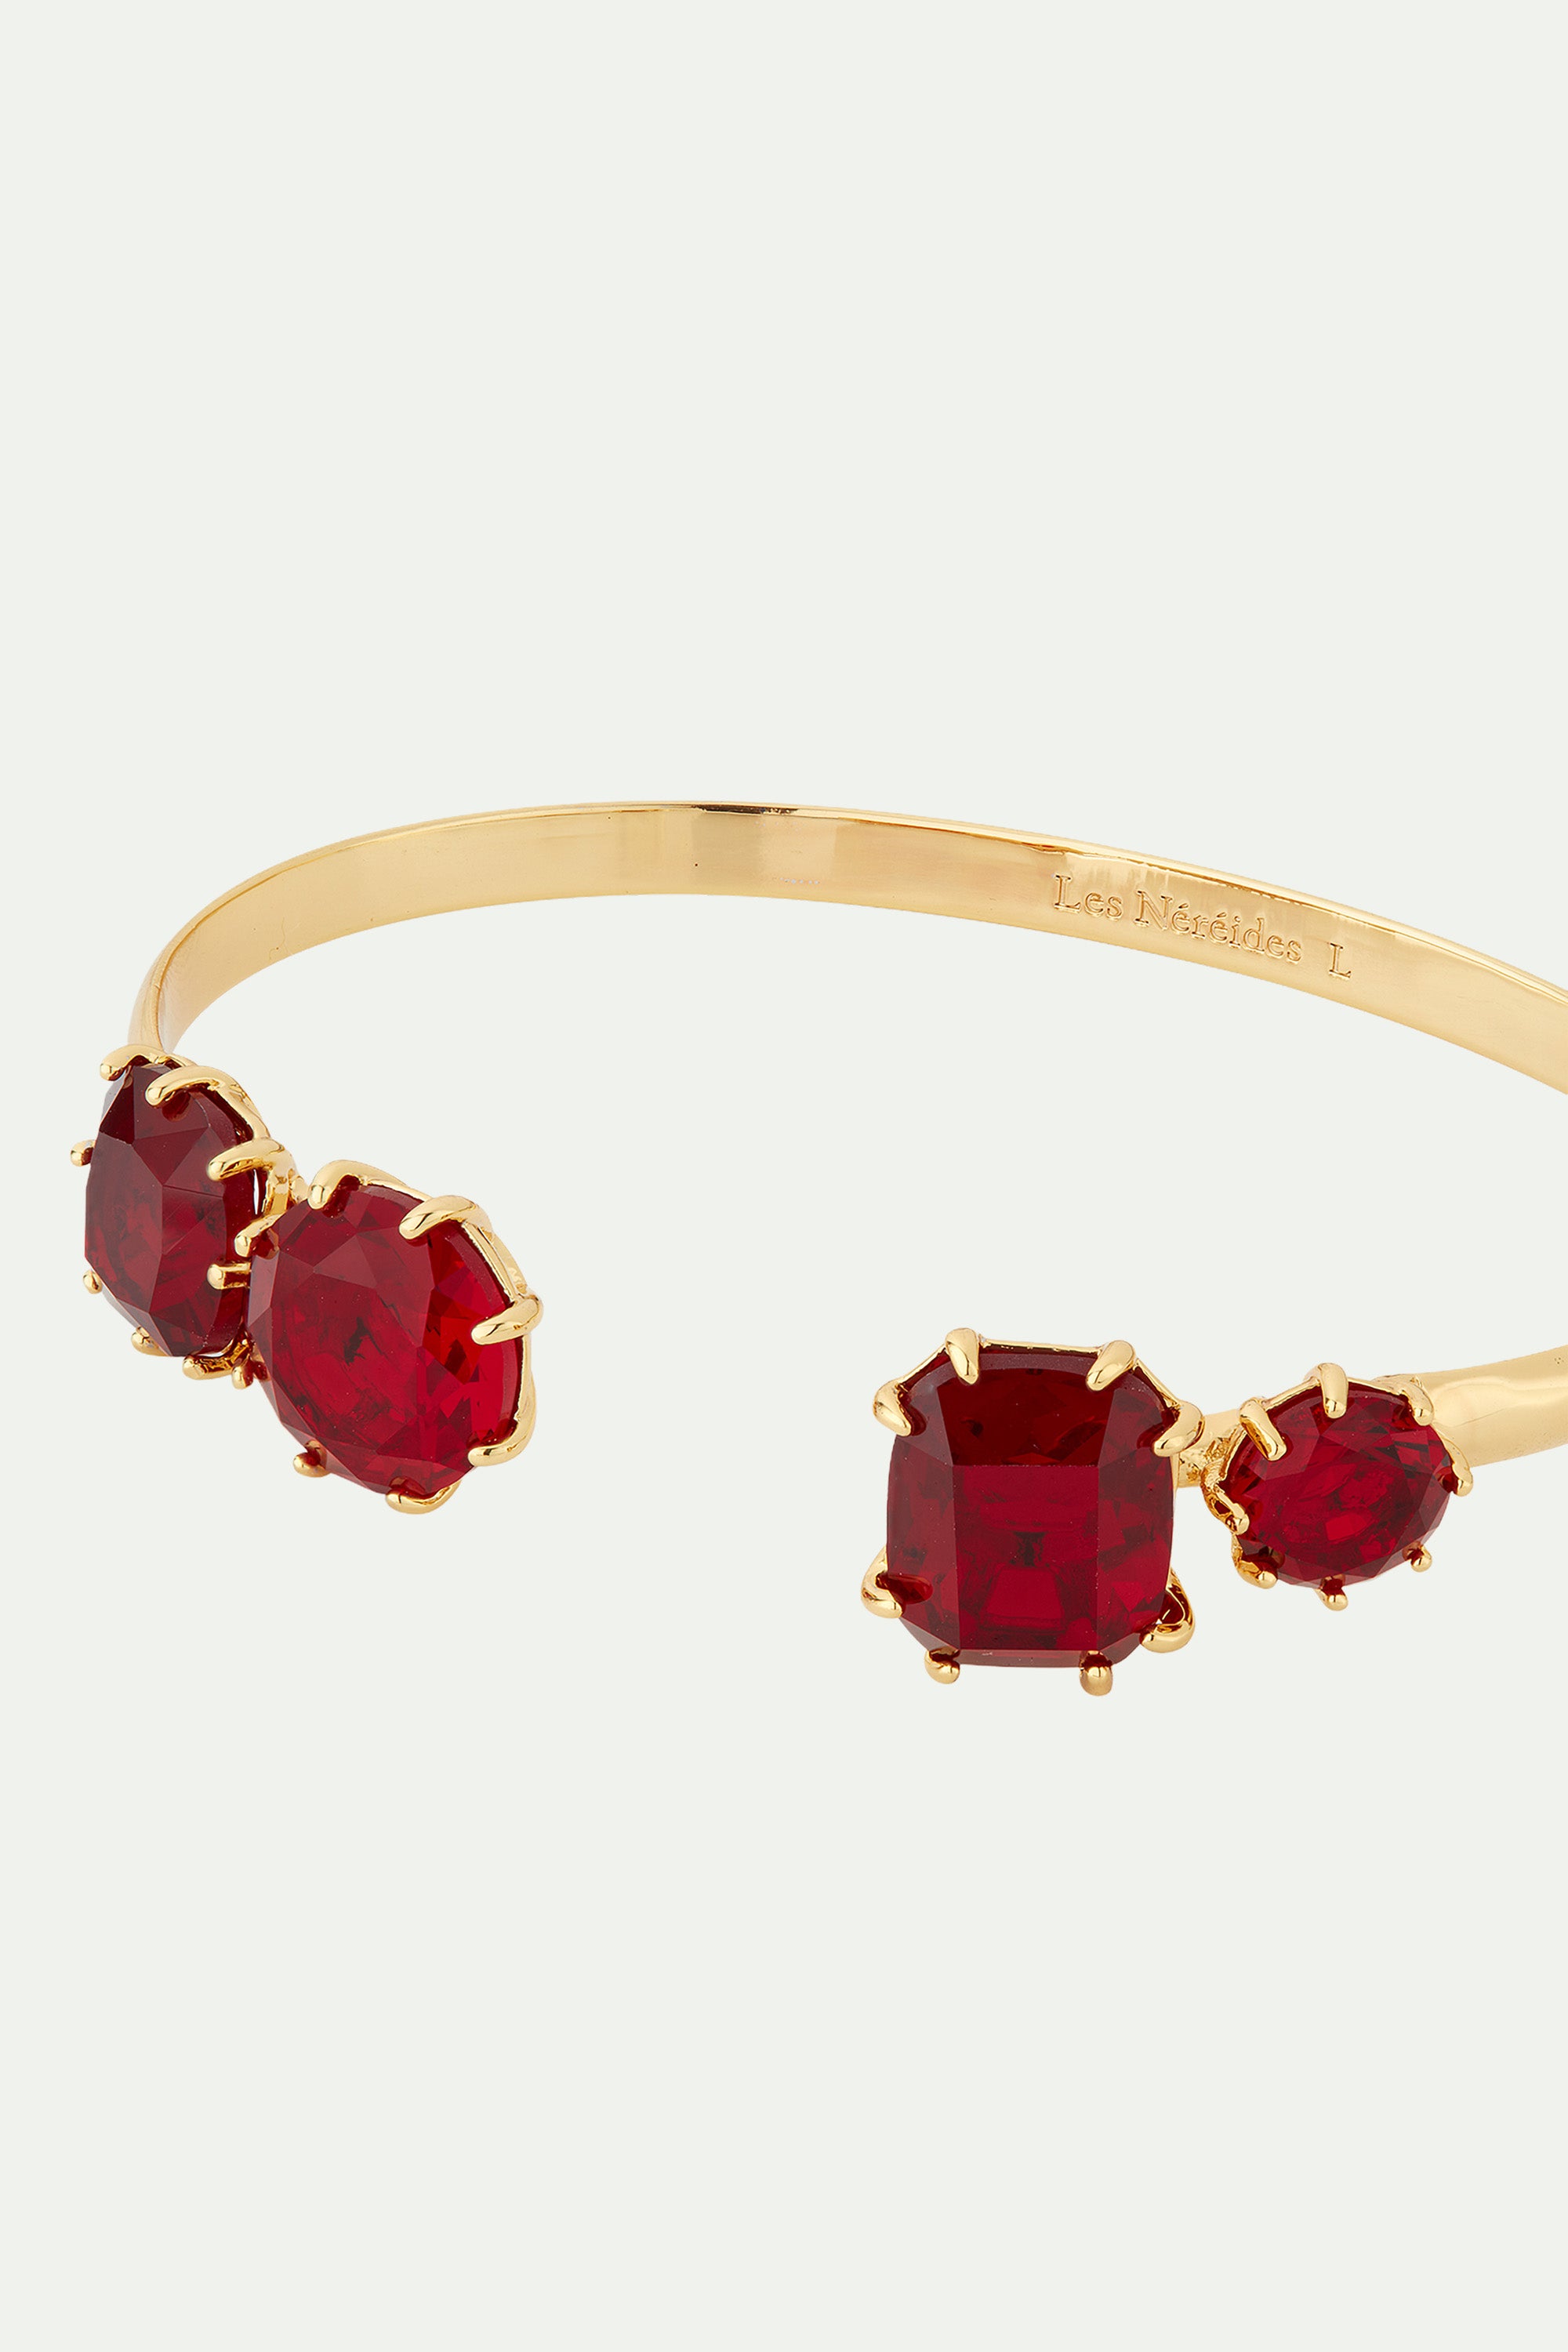 Garnet red diamantine 4 stone bangle bracelet